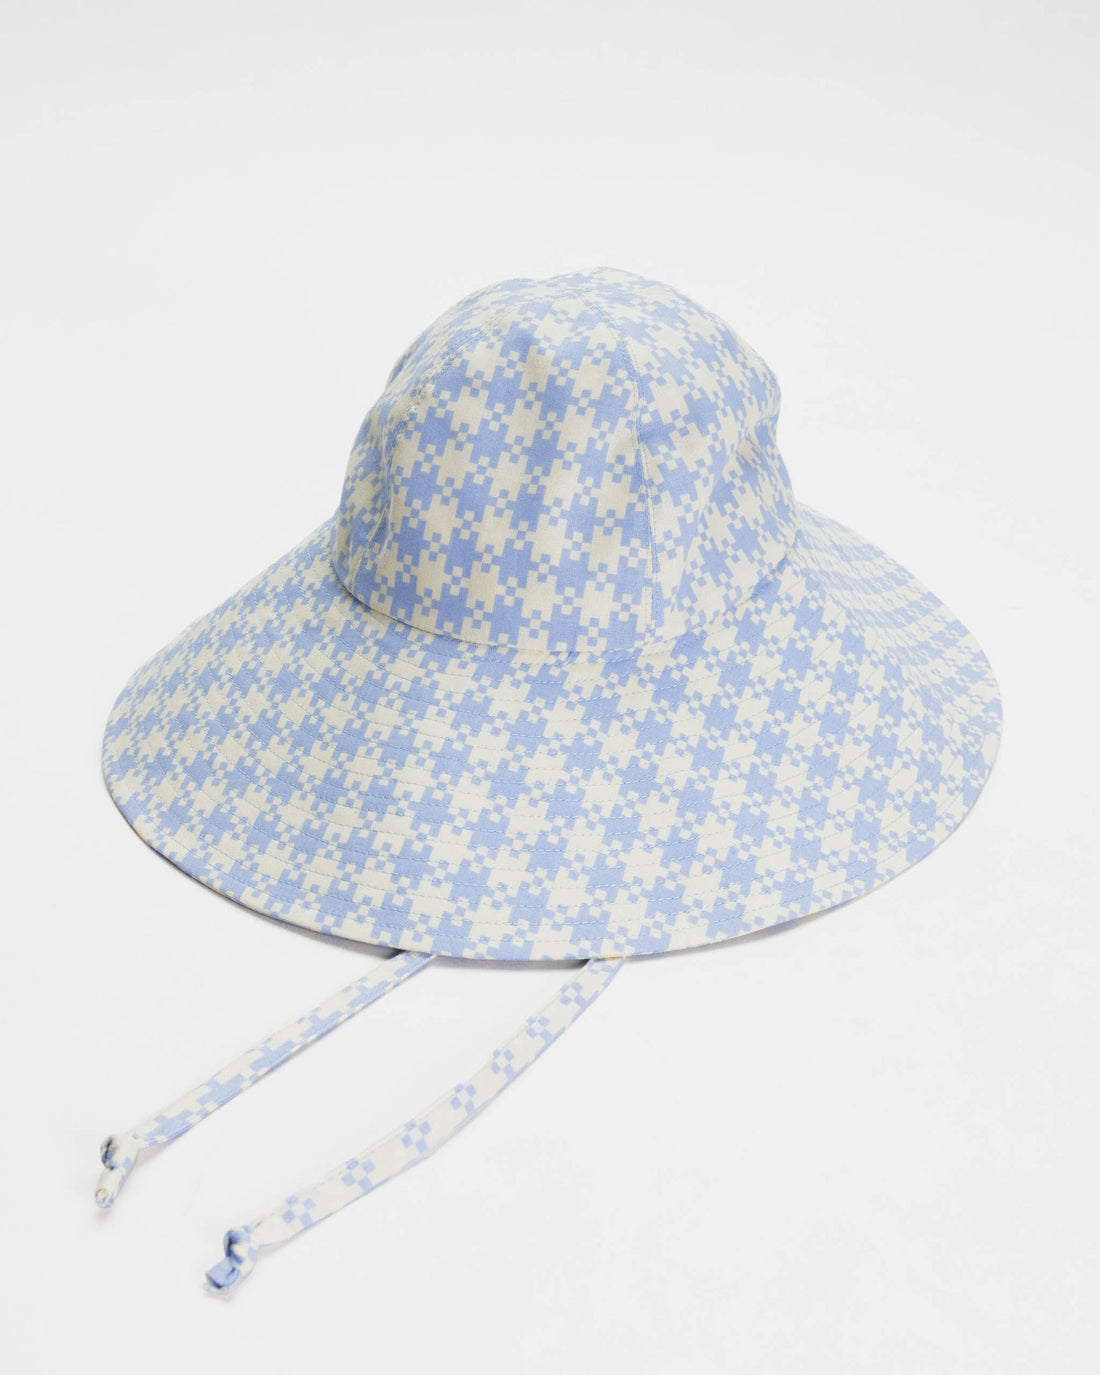 soft sun hat in gingham pixel